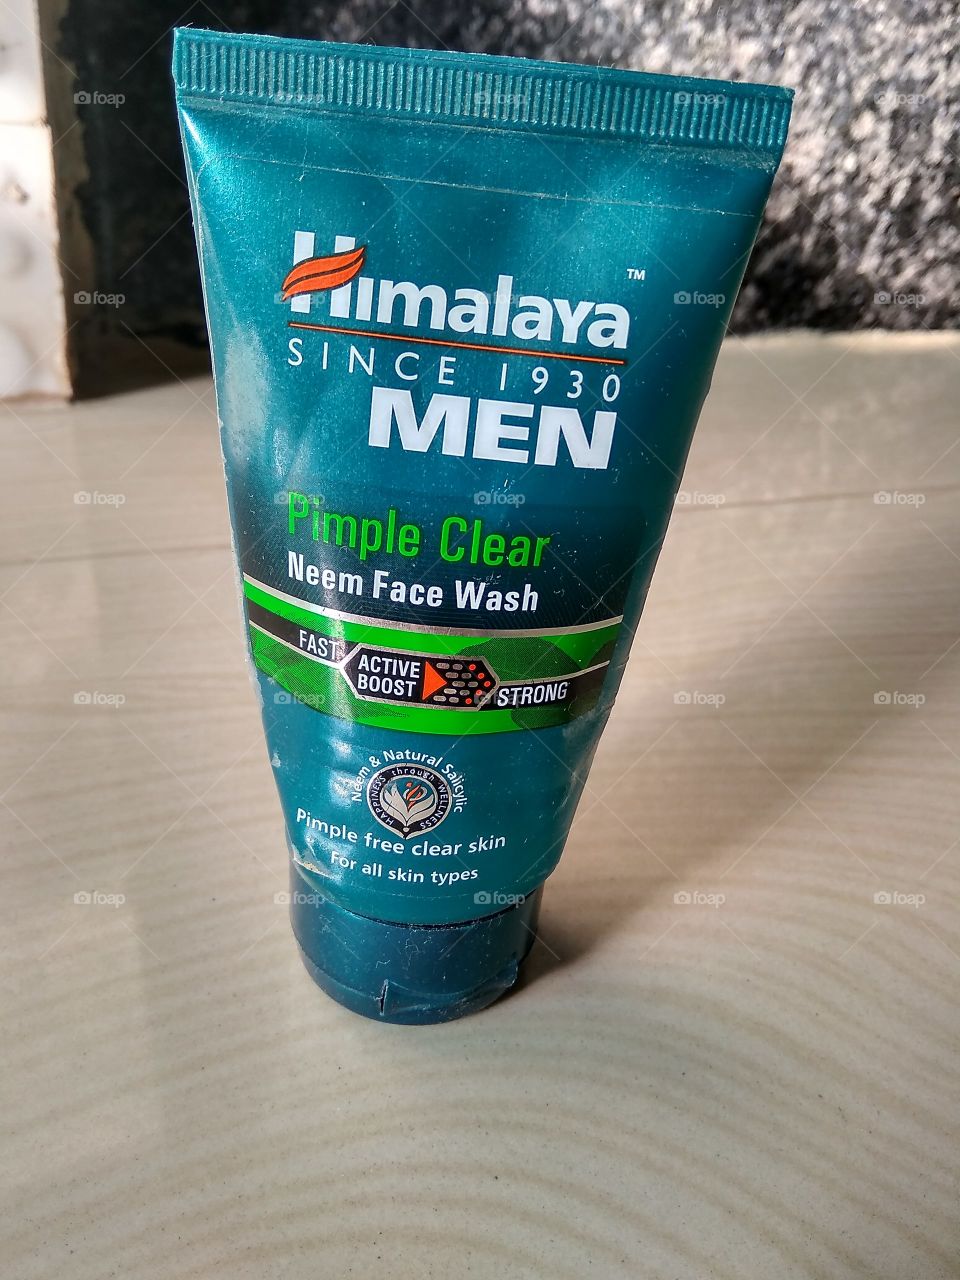 Himalaya men face wash